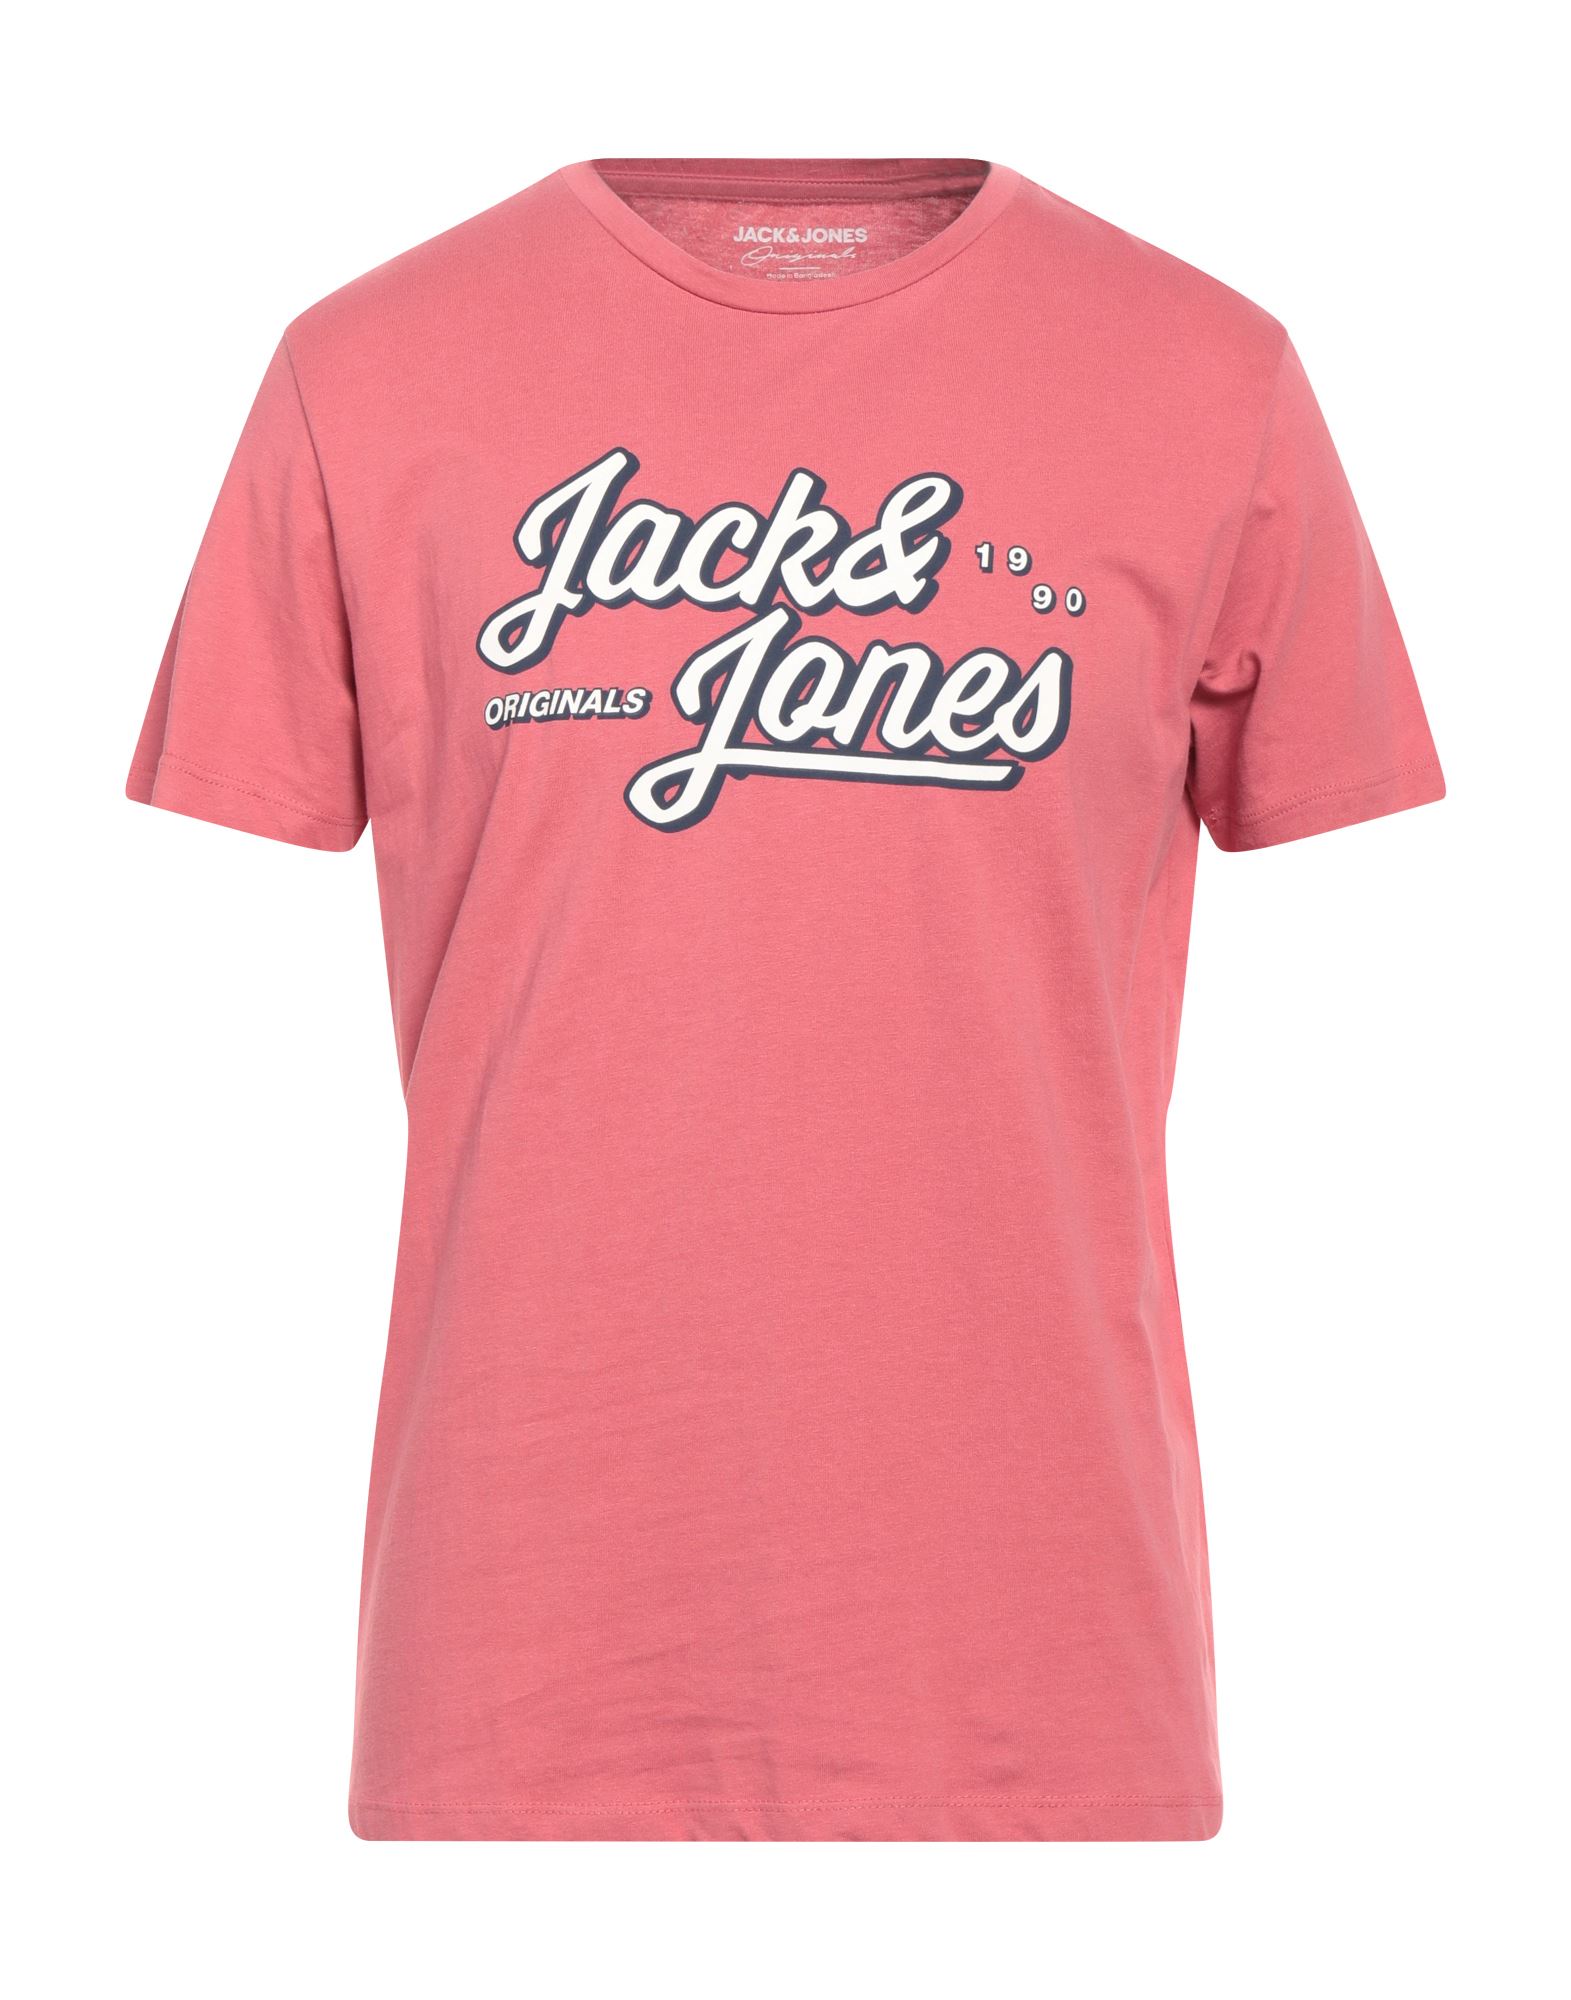 Jack & Jones Man T-shirt Pastel Pink Size S Cotton